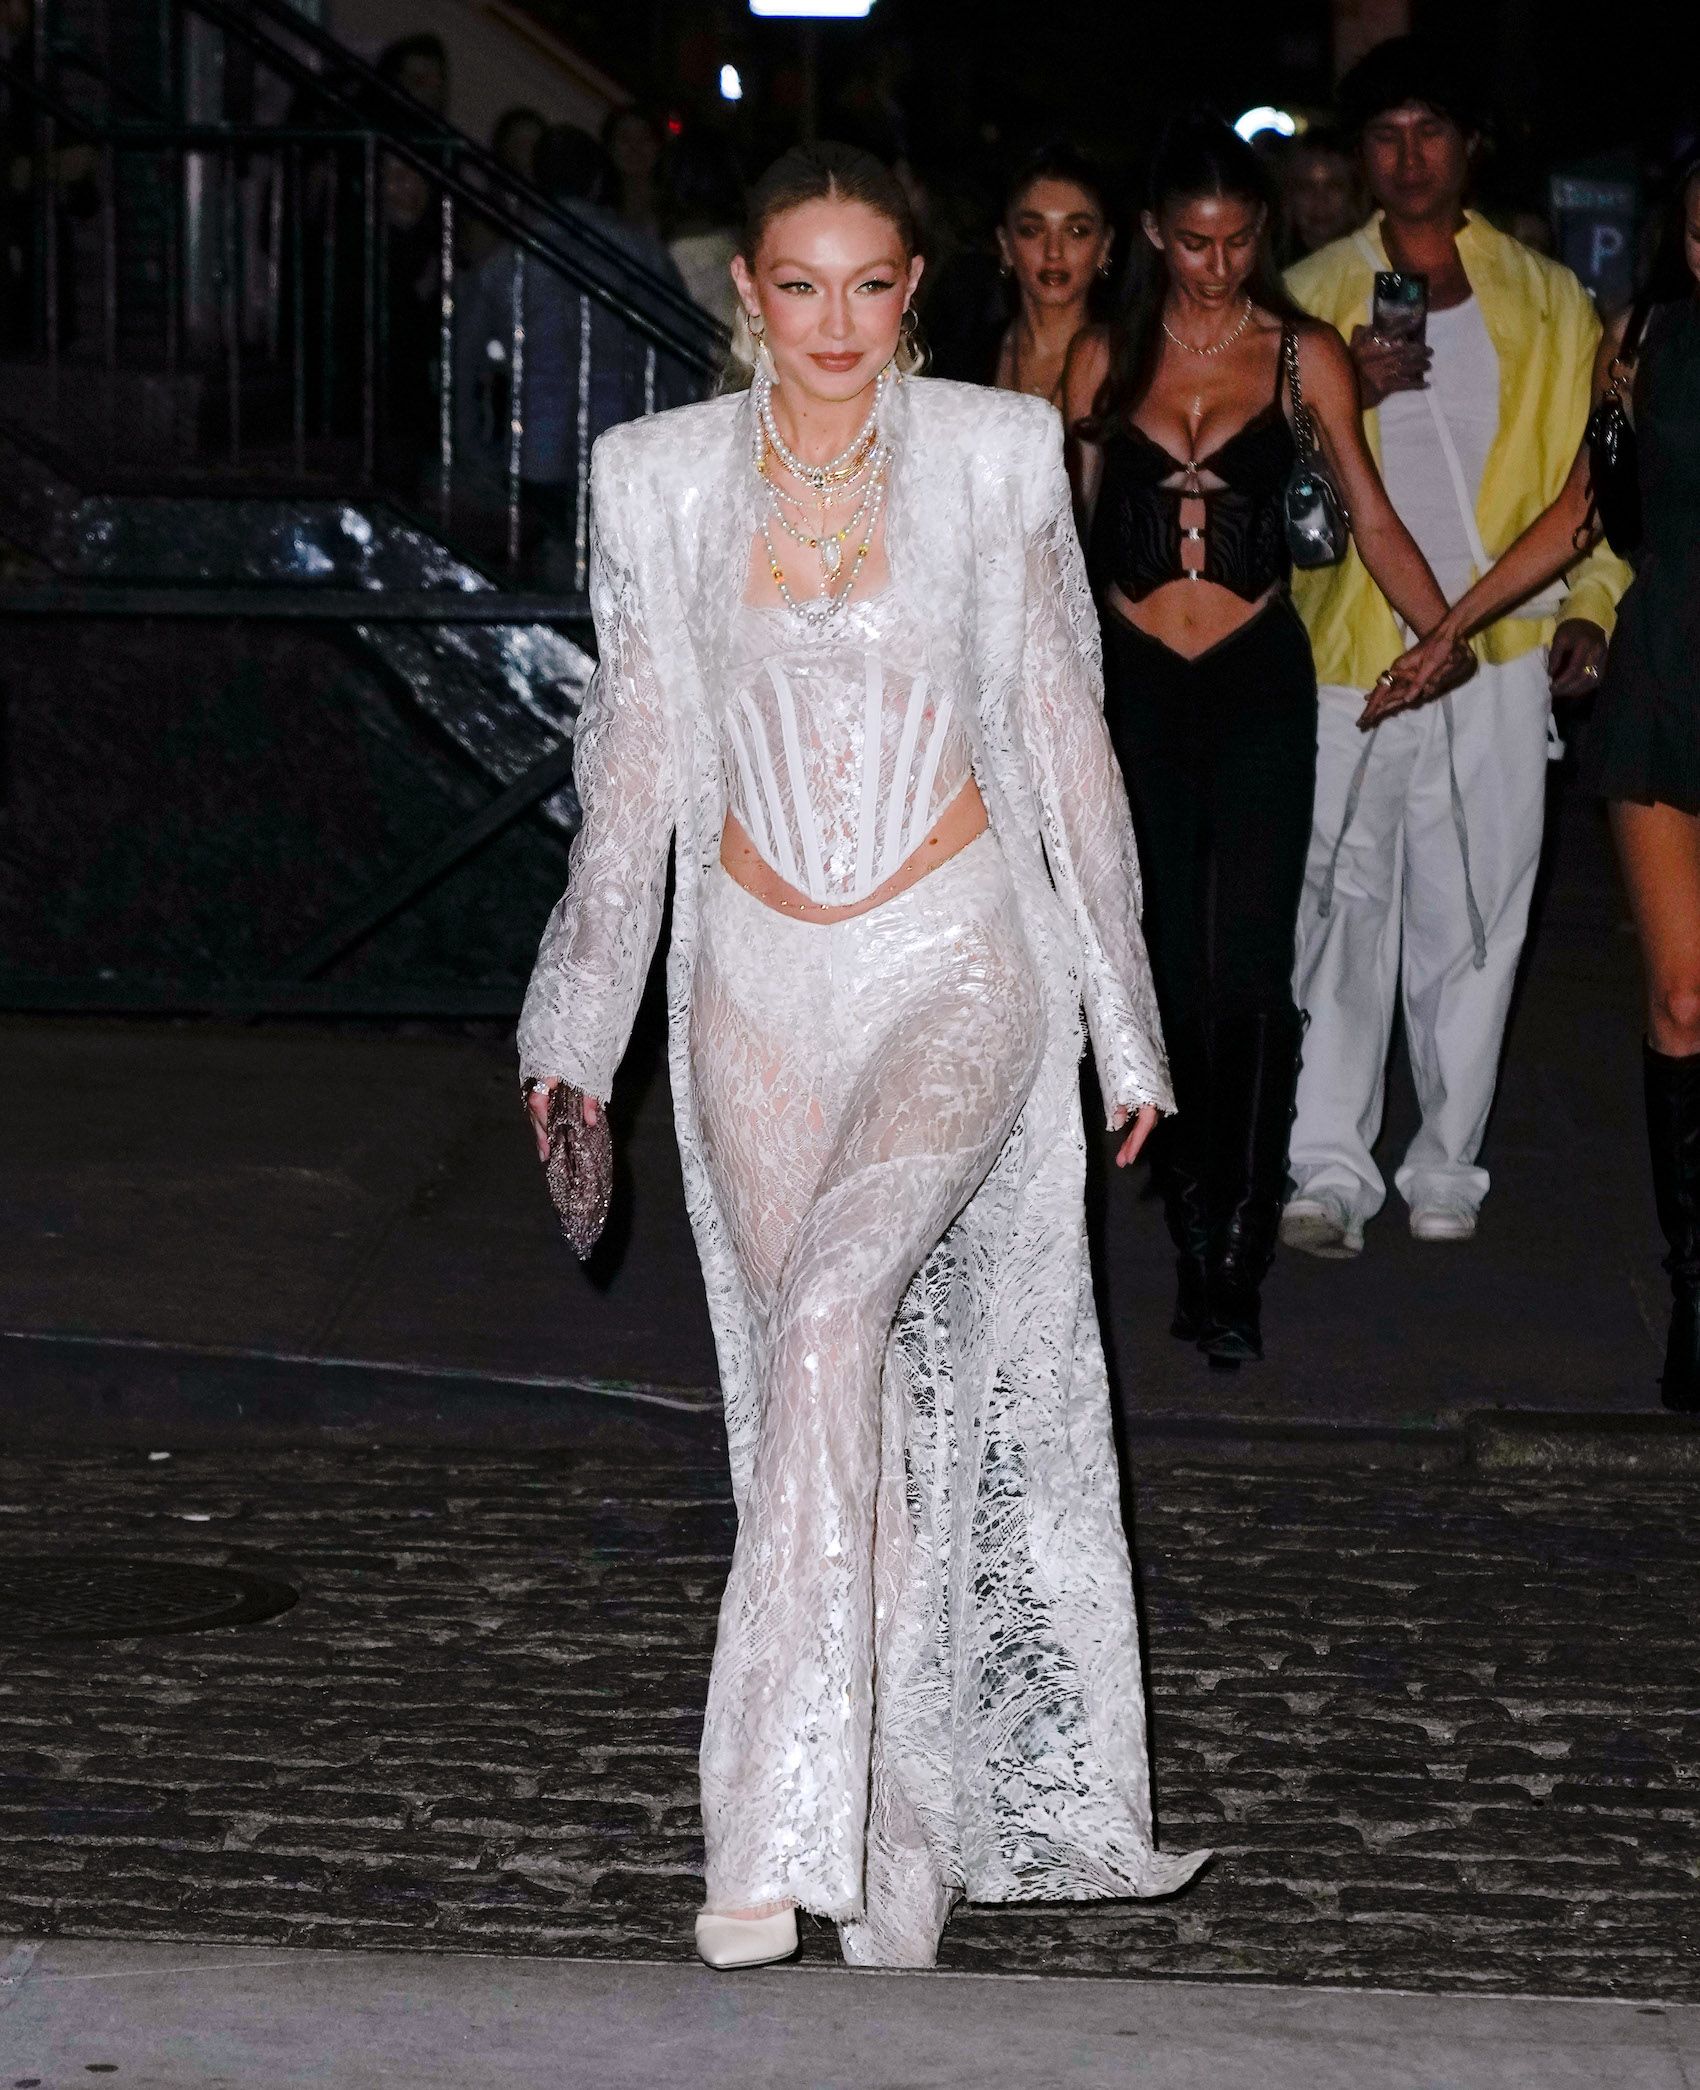 Gigi Hadid's Birthday Outfit Involves a Paneled Corset and Sheer Lace Pants